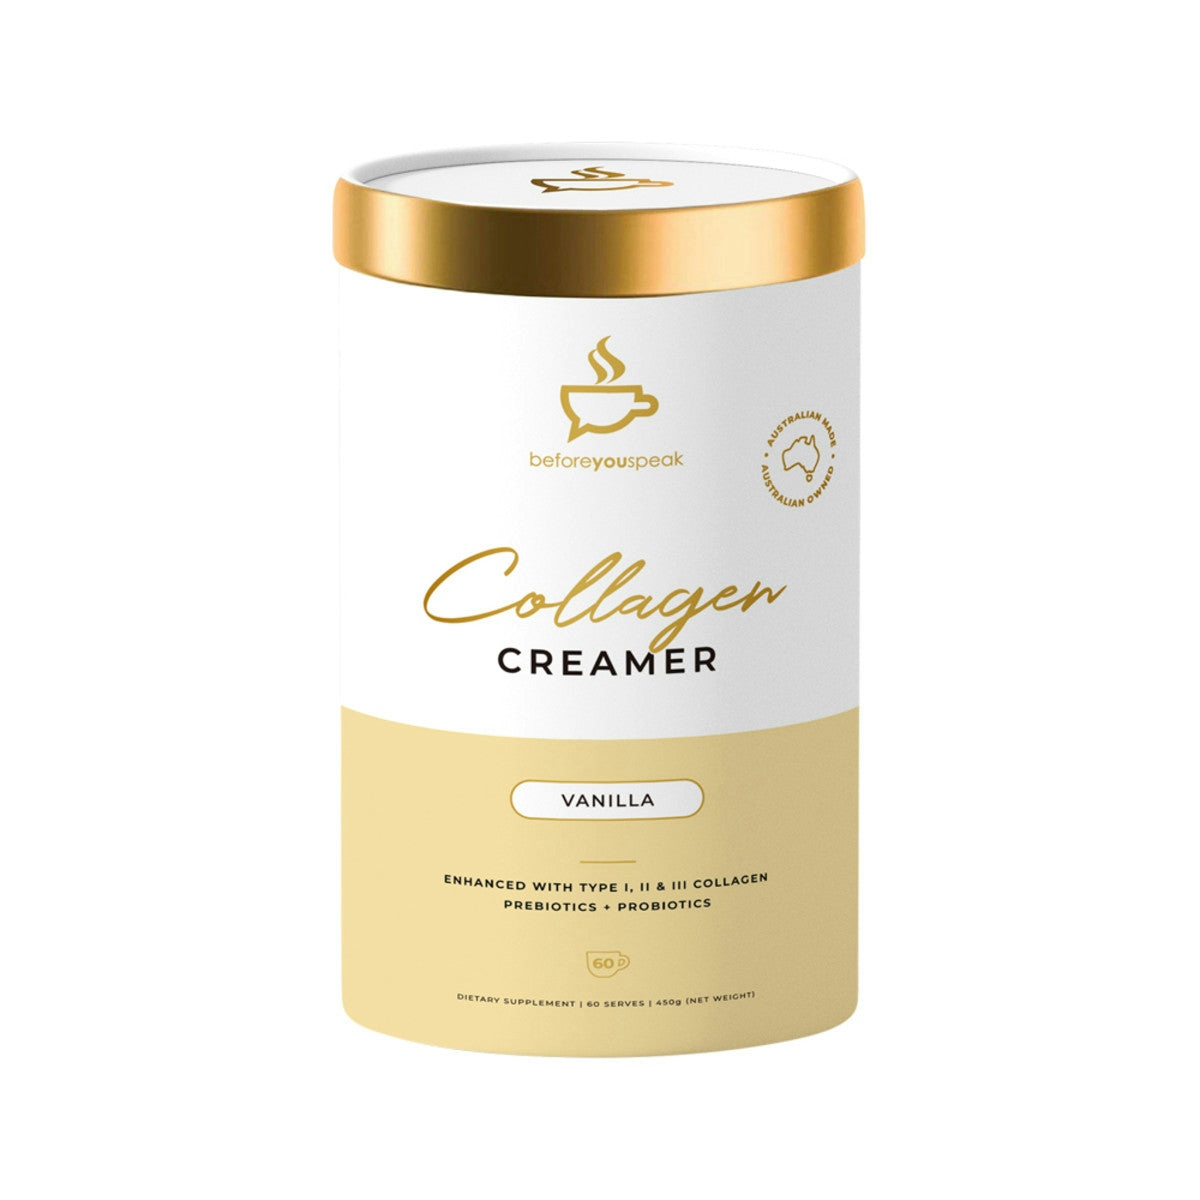 image ofBefore You Speak Collagen Creamer Vanilla 450g on white background